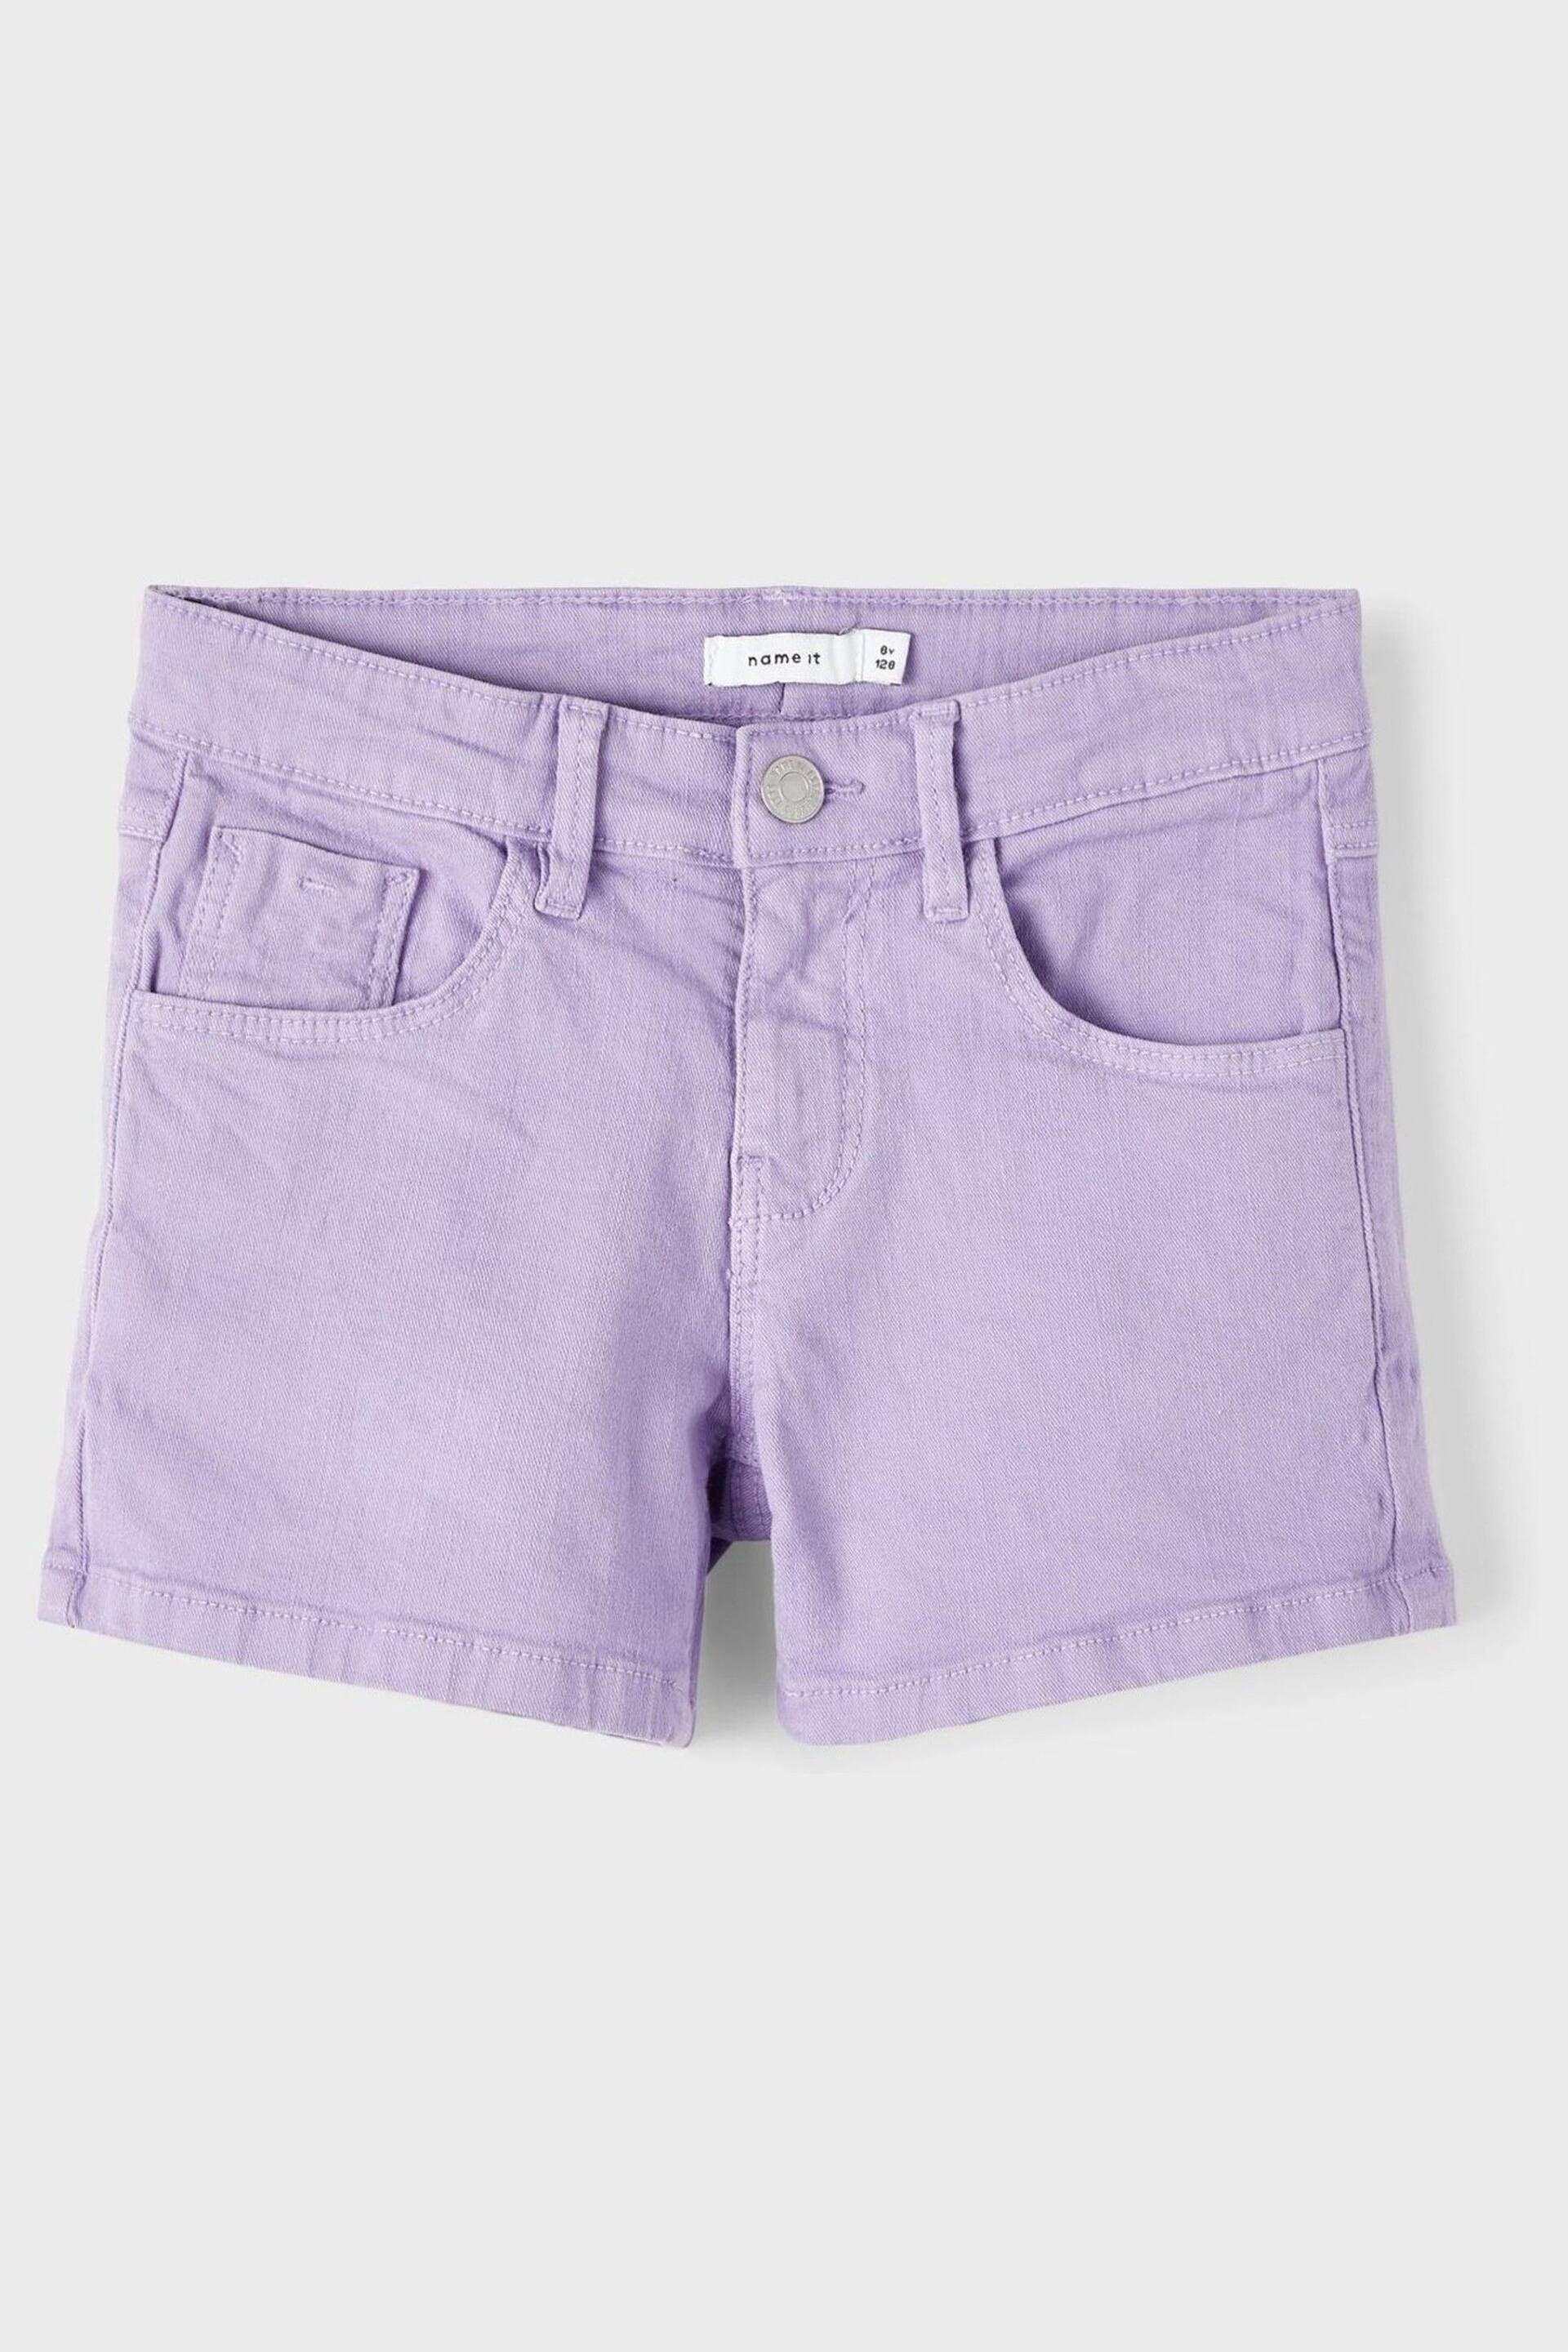 Name It Purple Twist Shorts - Image 3 of 4